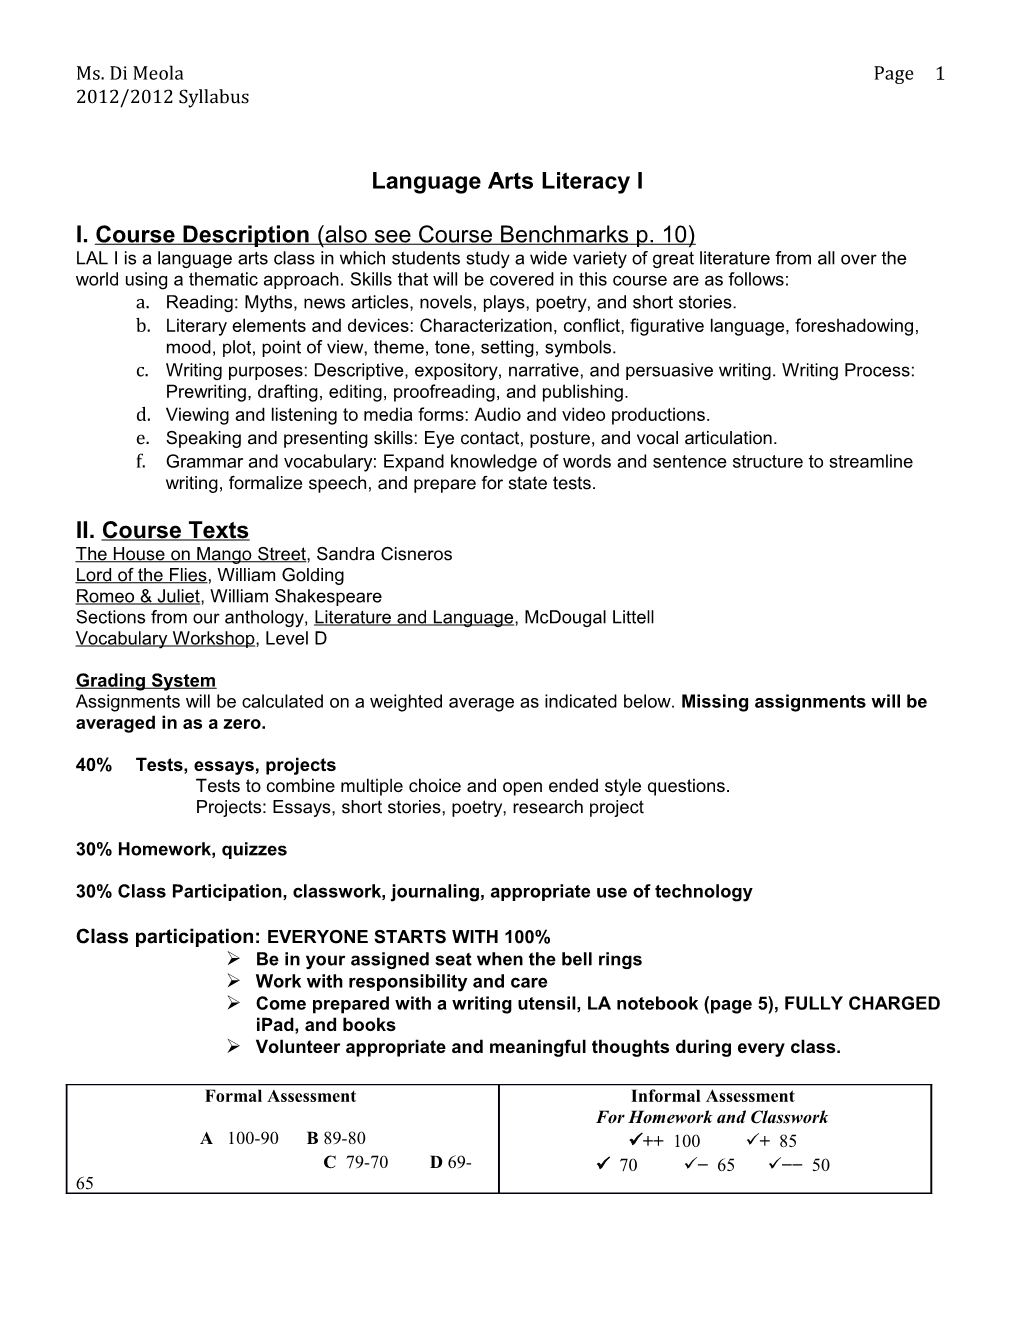 Language Arts Literacy I